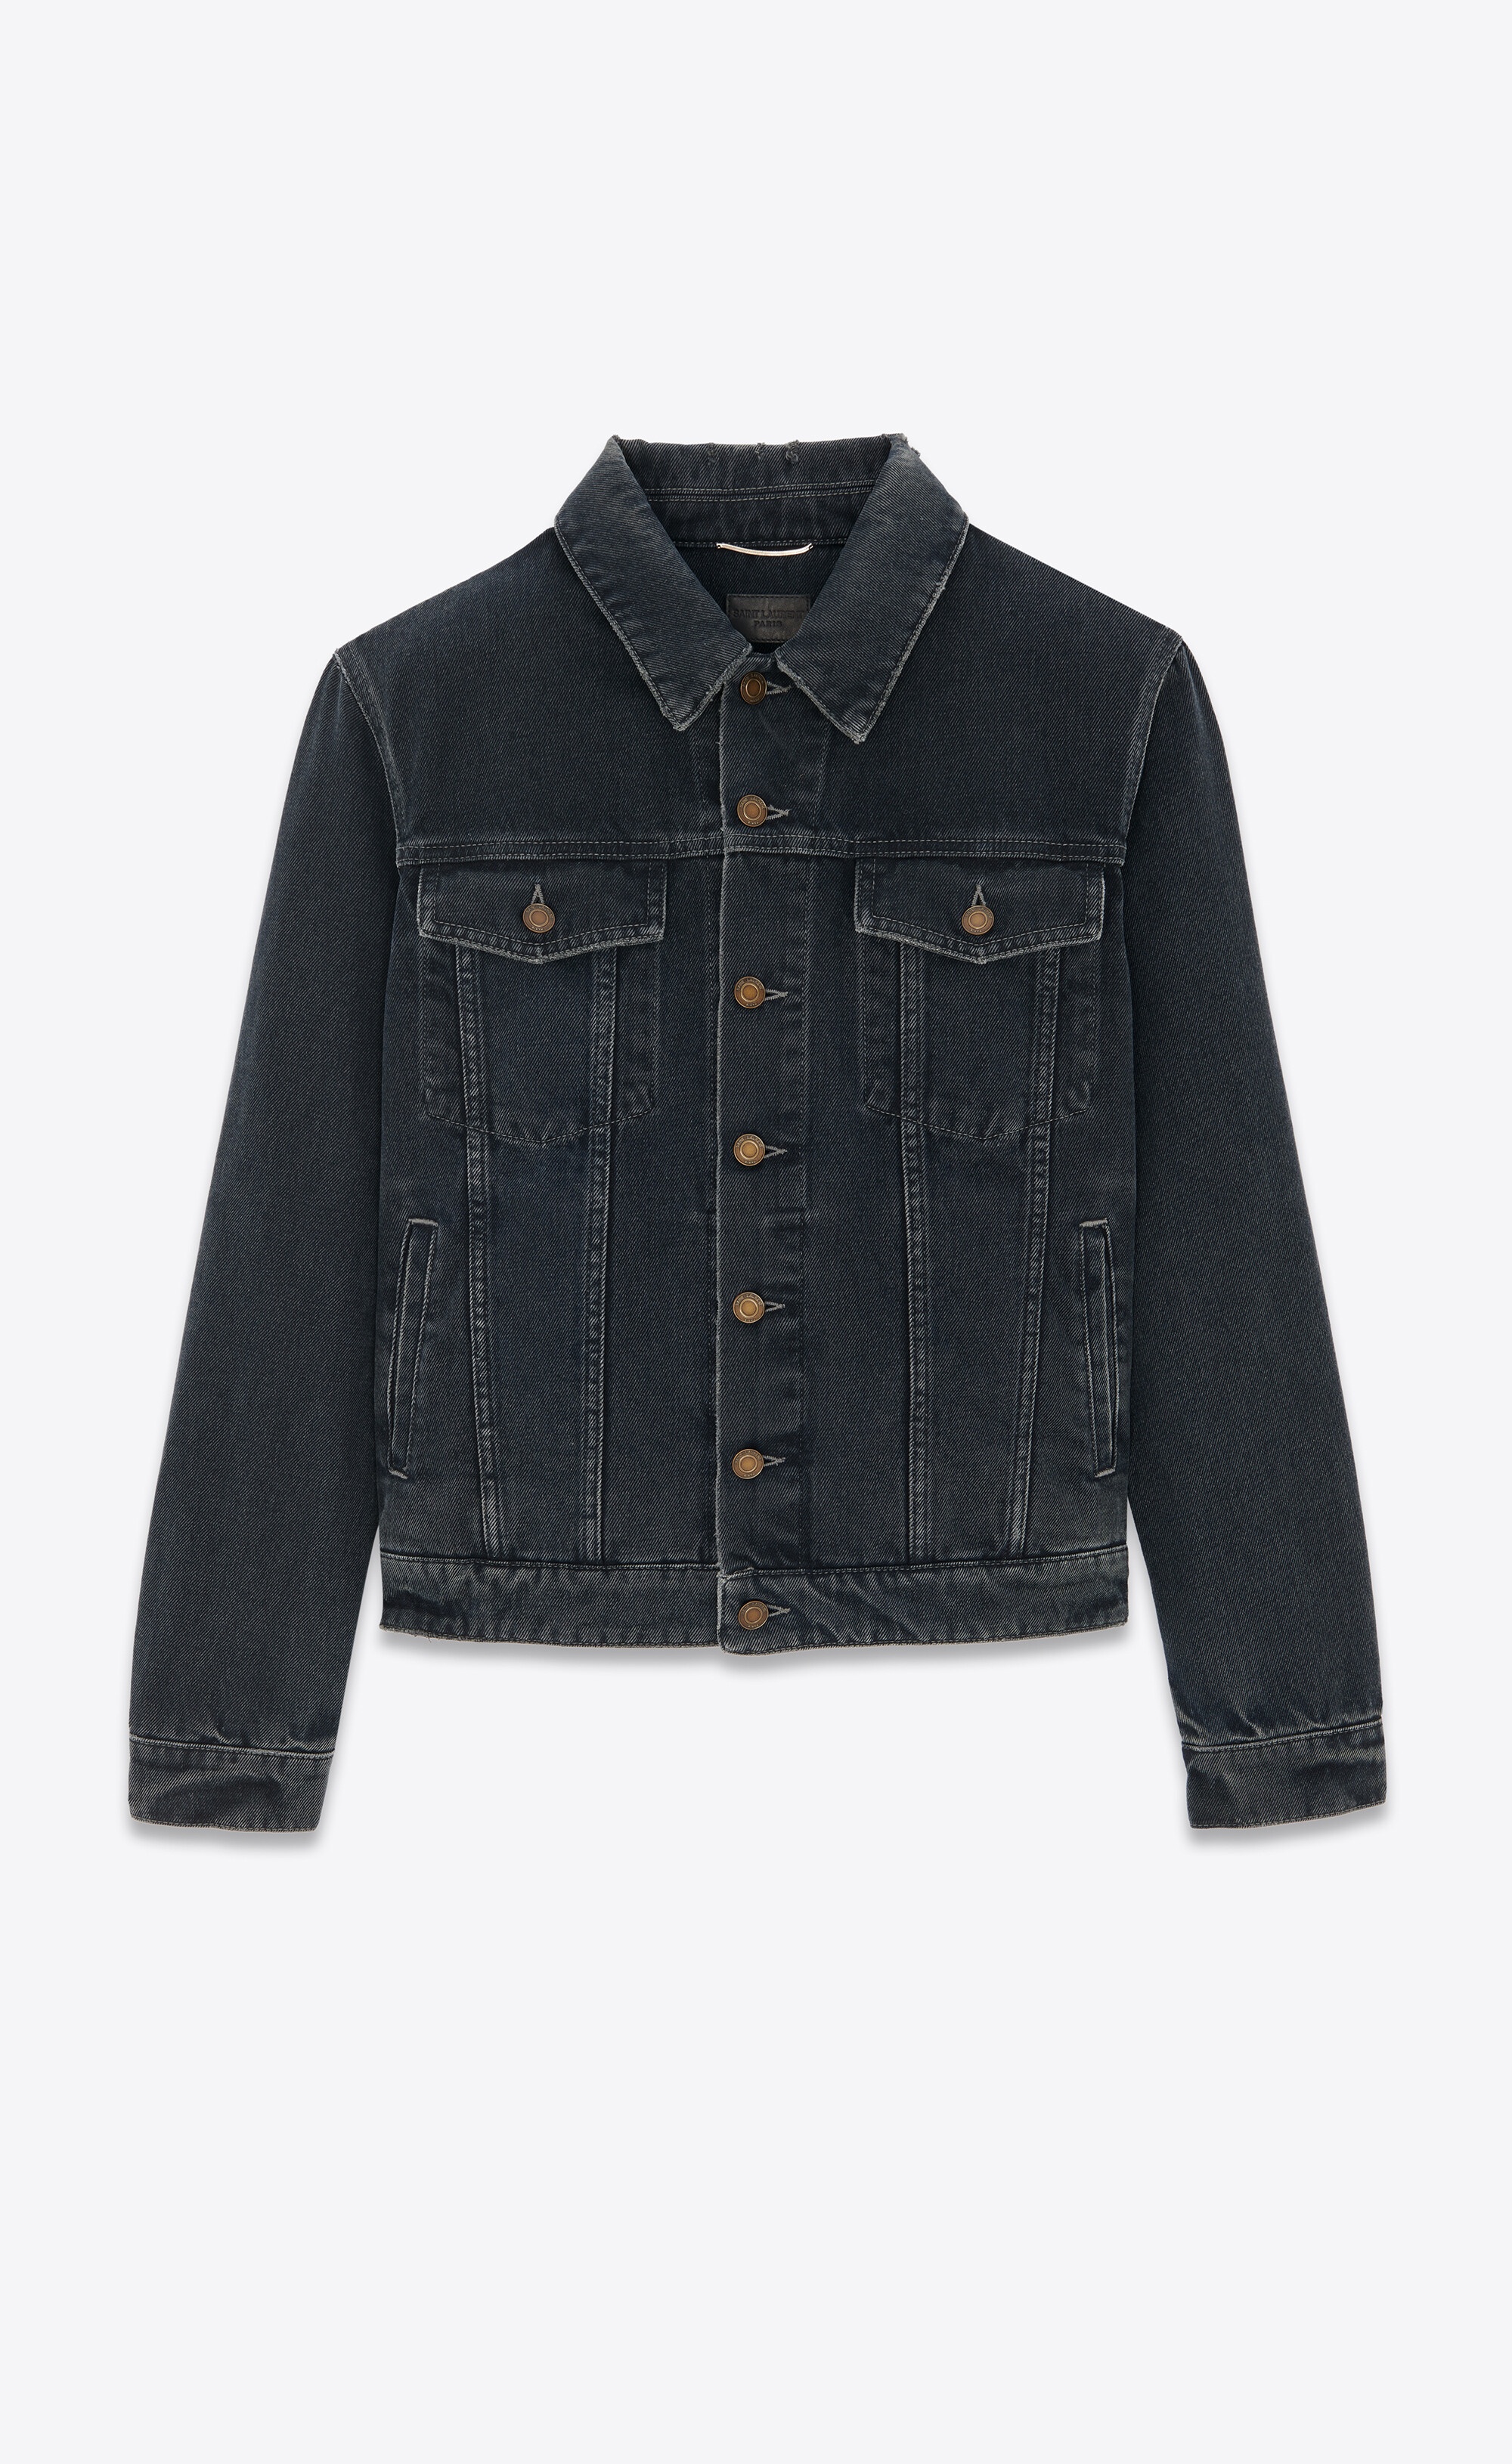 classic jacket in dark blue black denim - 1